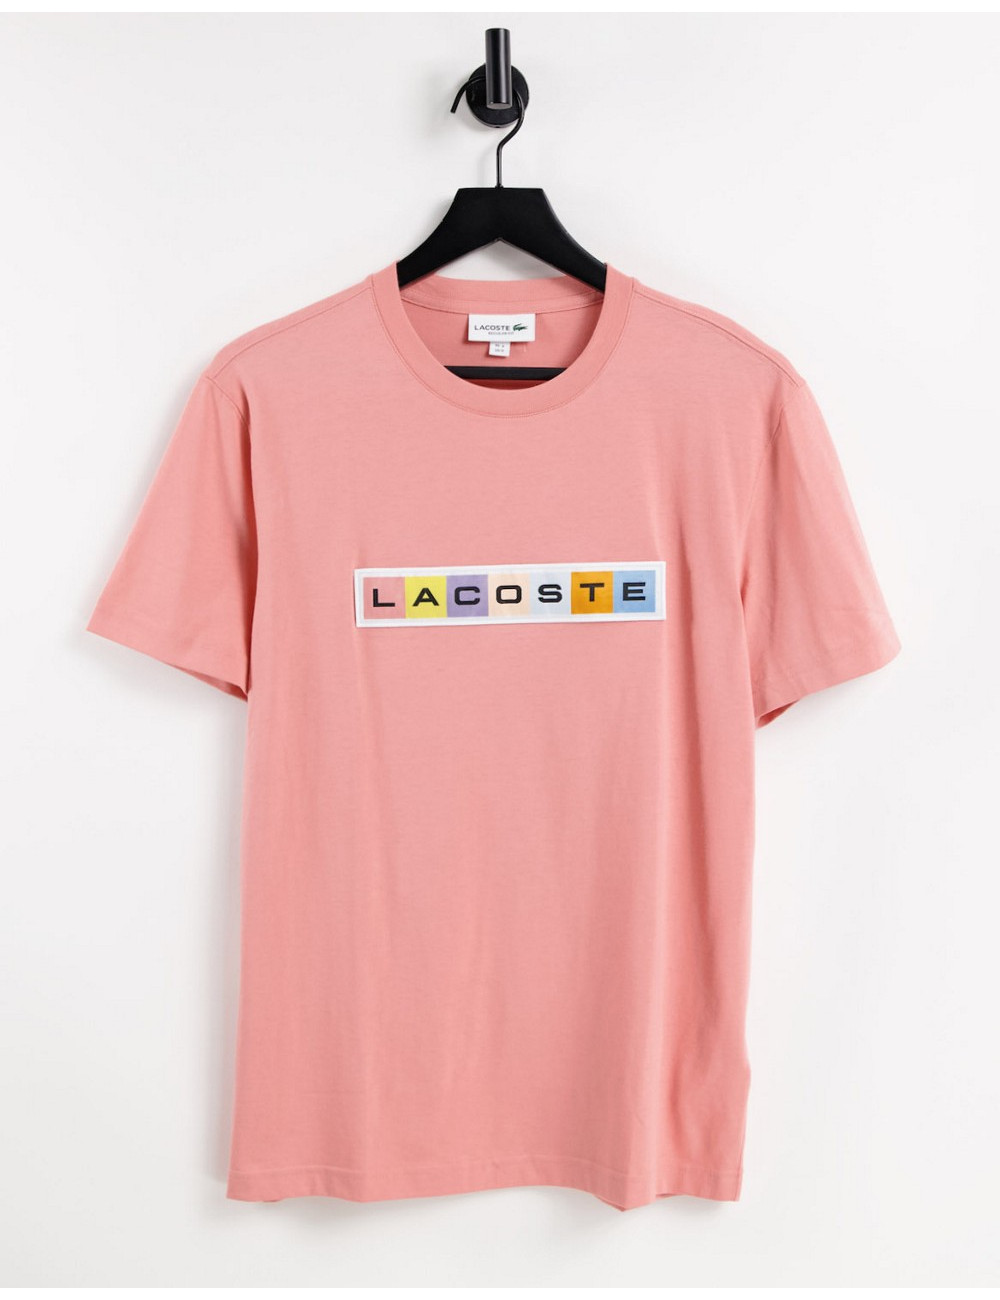 Lacoste logo t-shirt